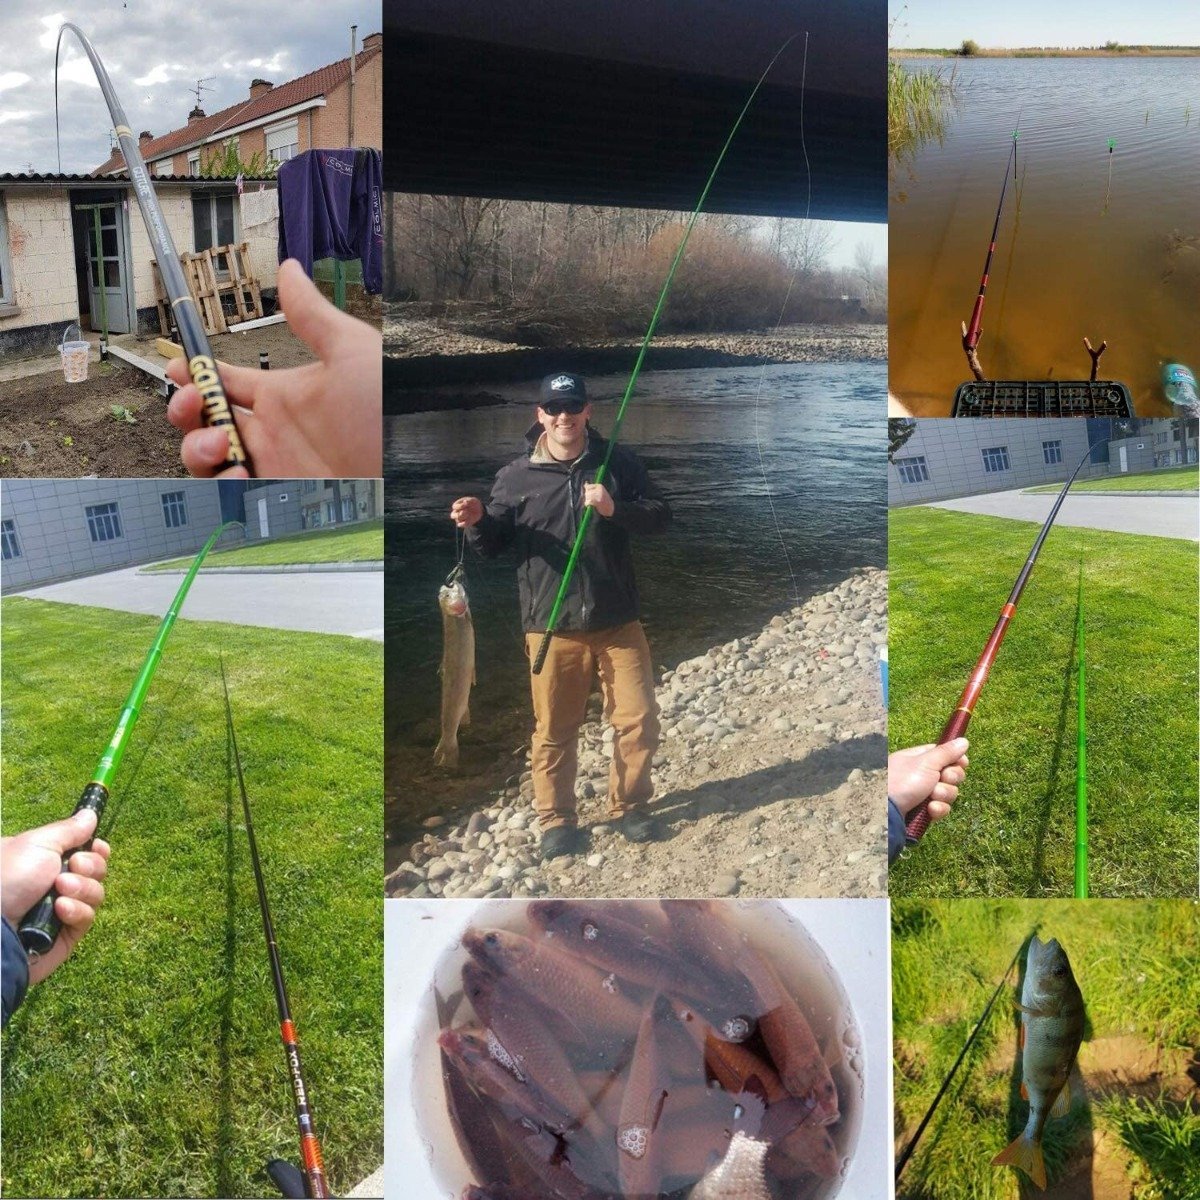 RED-FOX Stream Fishing Rod – GOTURE